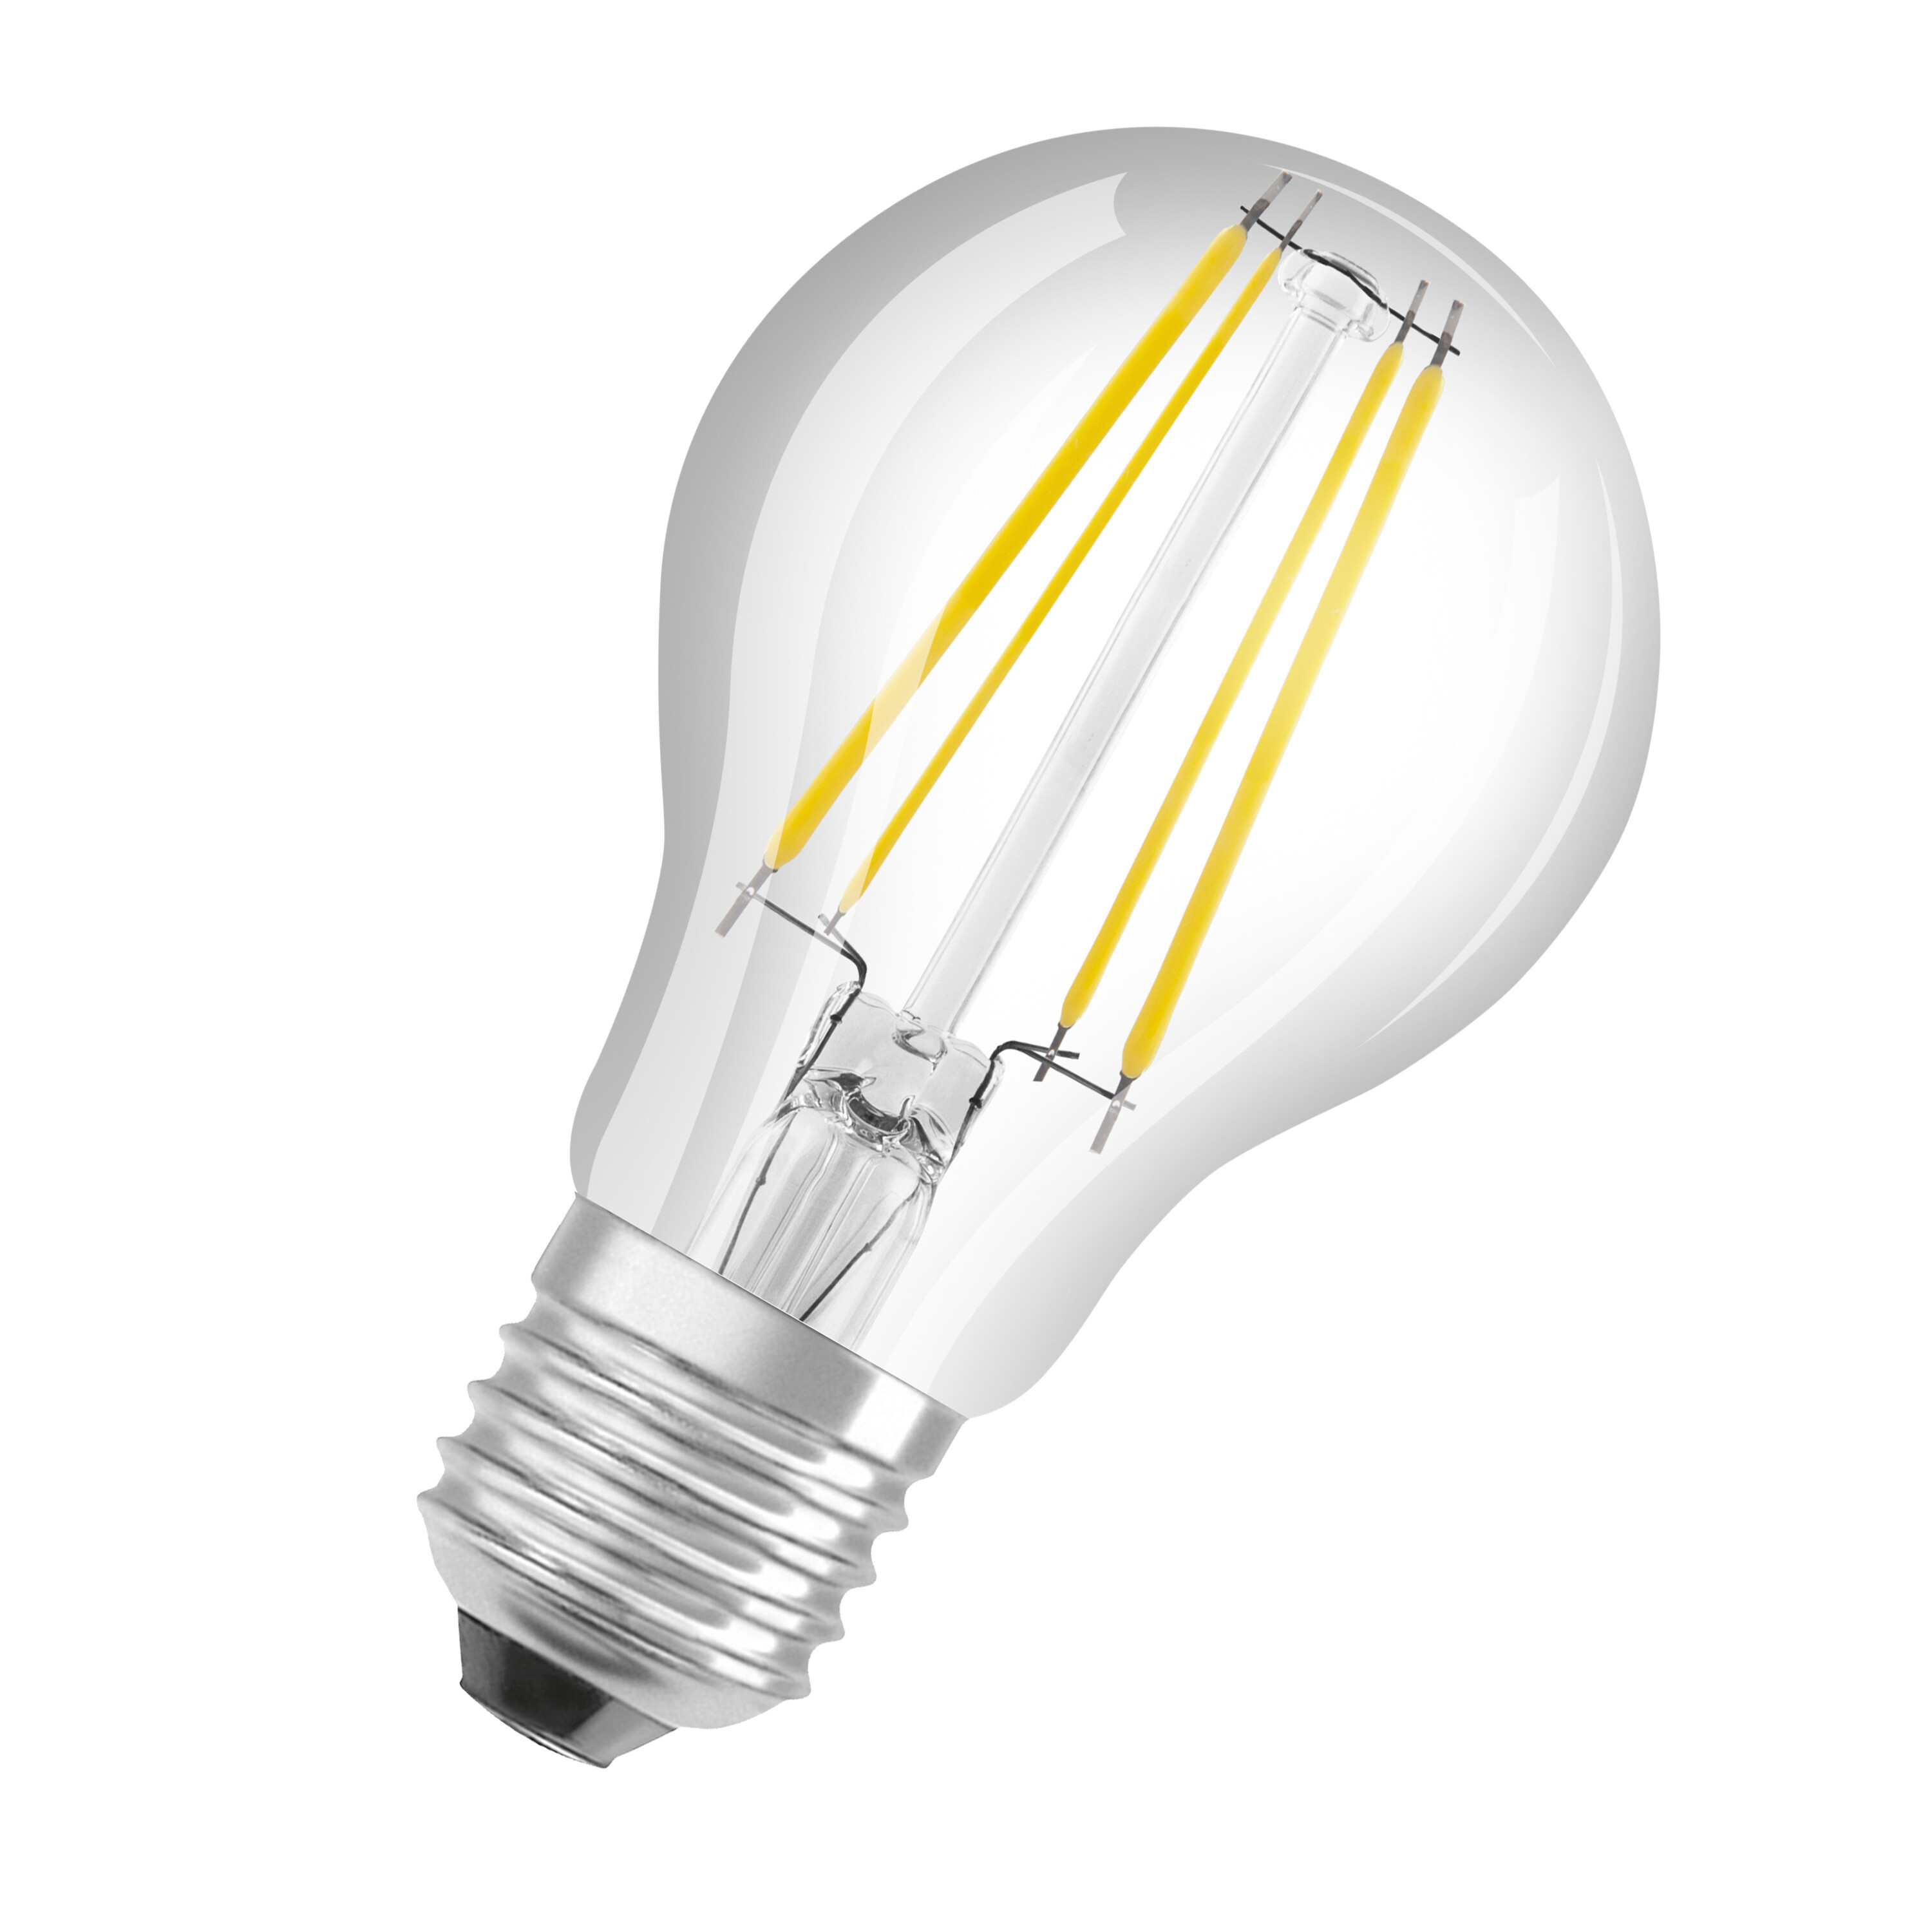 CLASSIC LED ULTRA 840 LEDVANCE Lampe Warmweiß LAMPS A LED EFFICIENT FILAMENT ENERGY Lumen